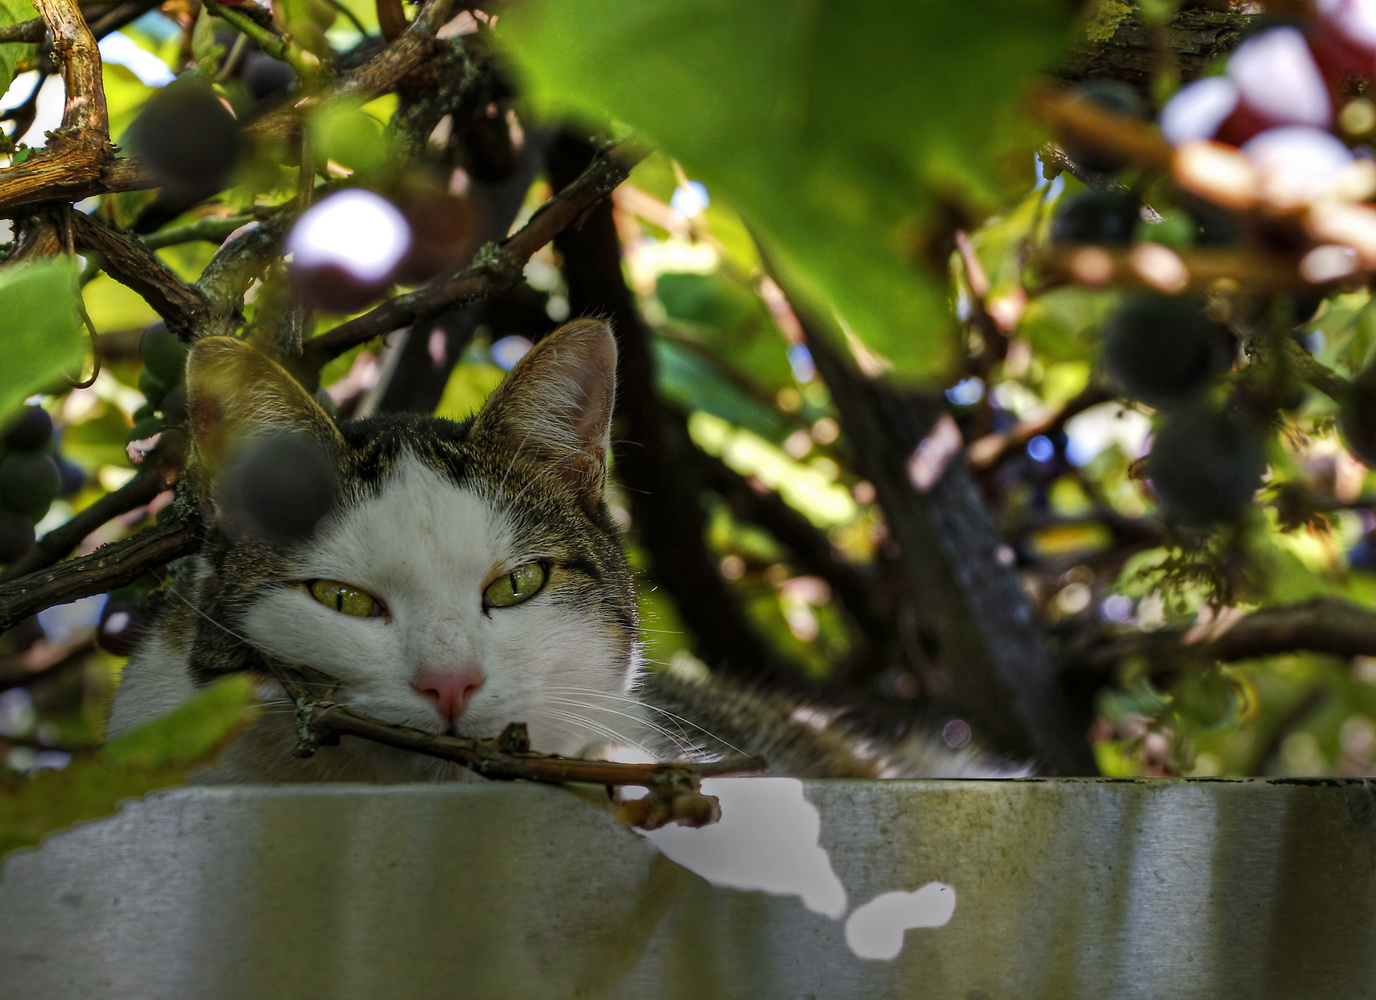 Katze auf dem Blechdach